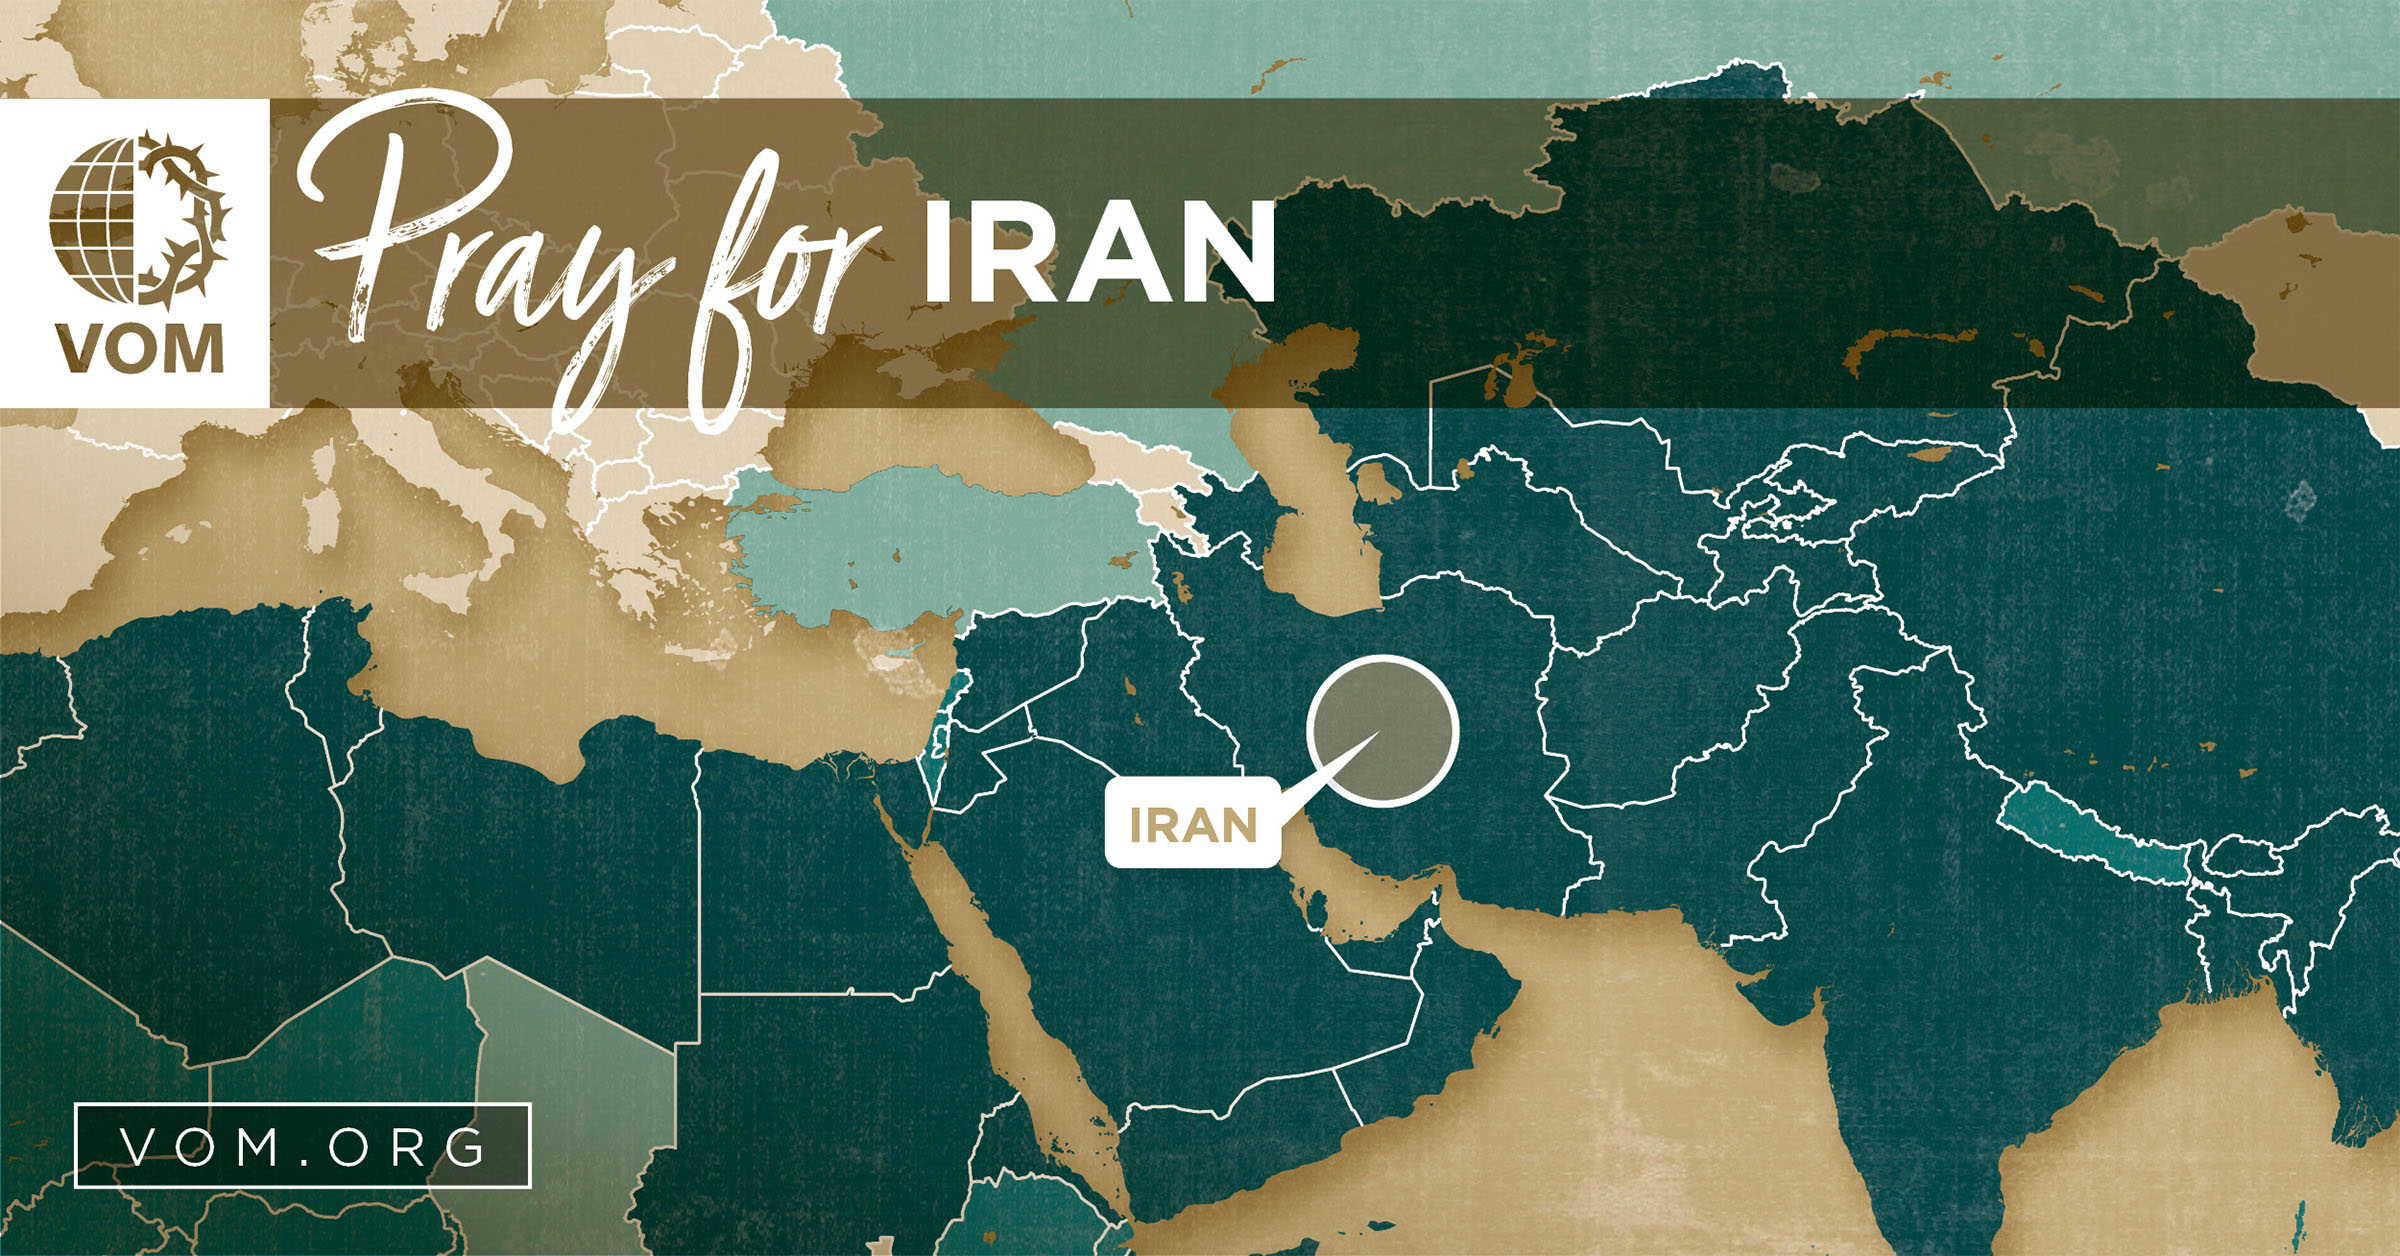 Pray for Iran